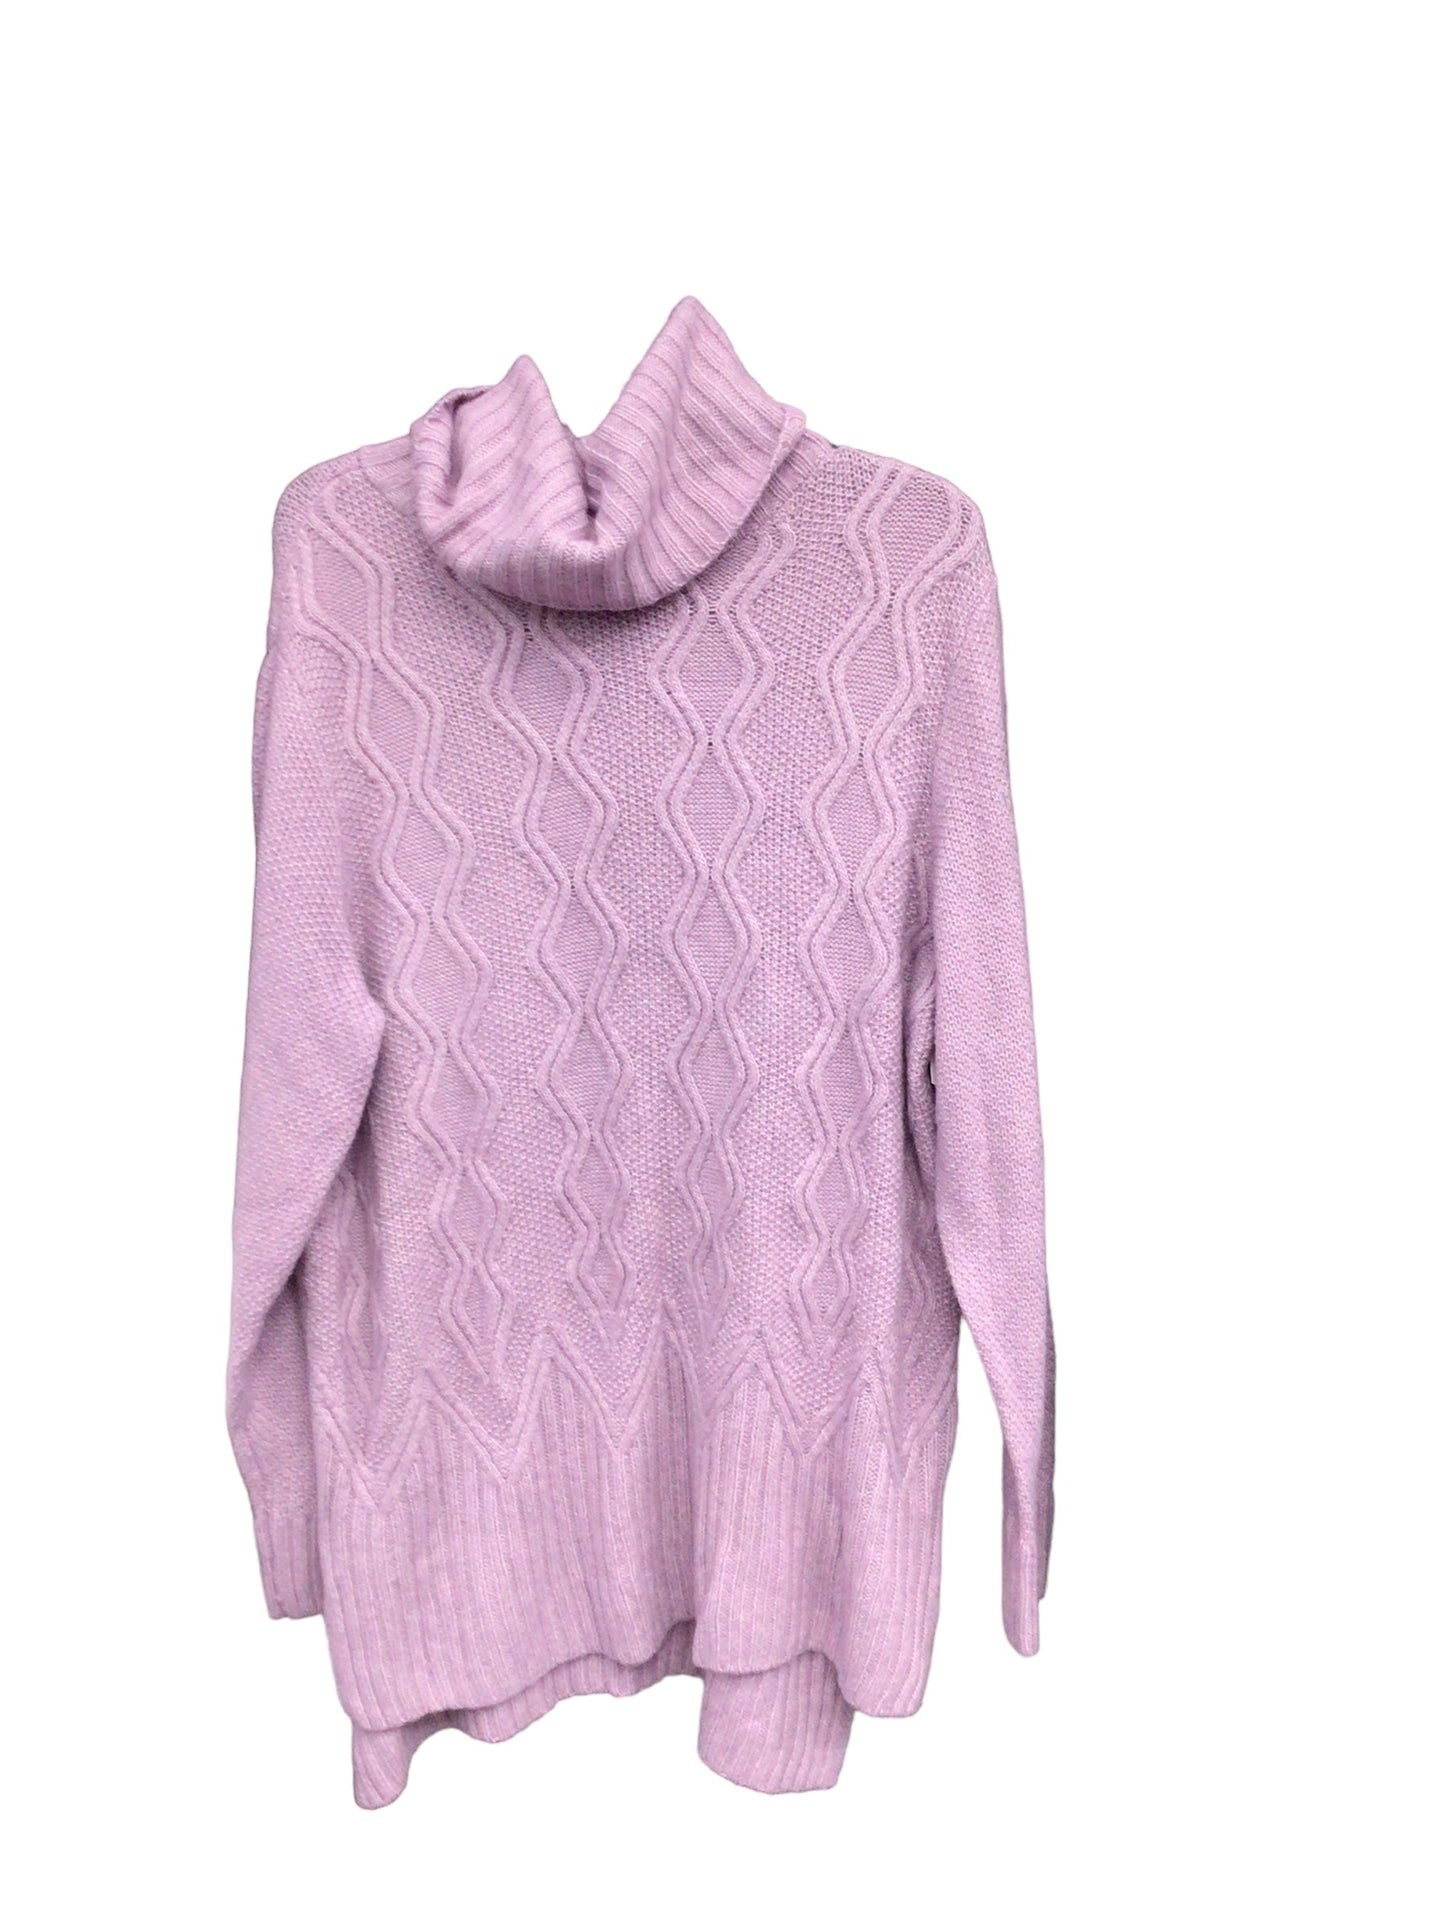 Sweater Cardigan By Sonoma  Size: Xl